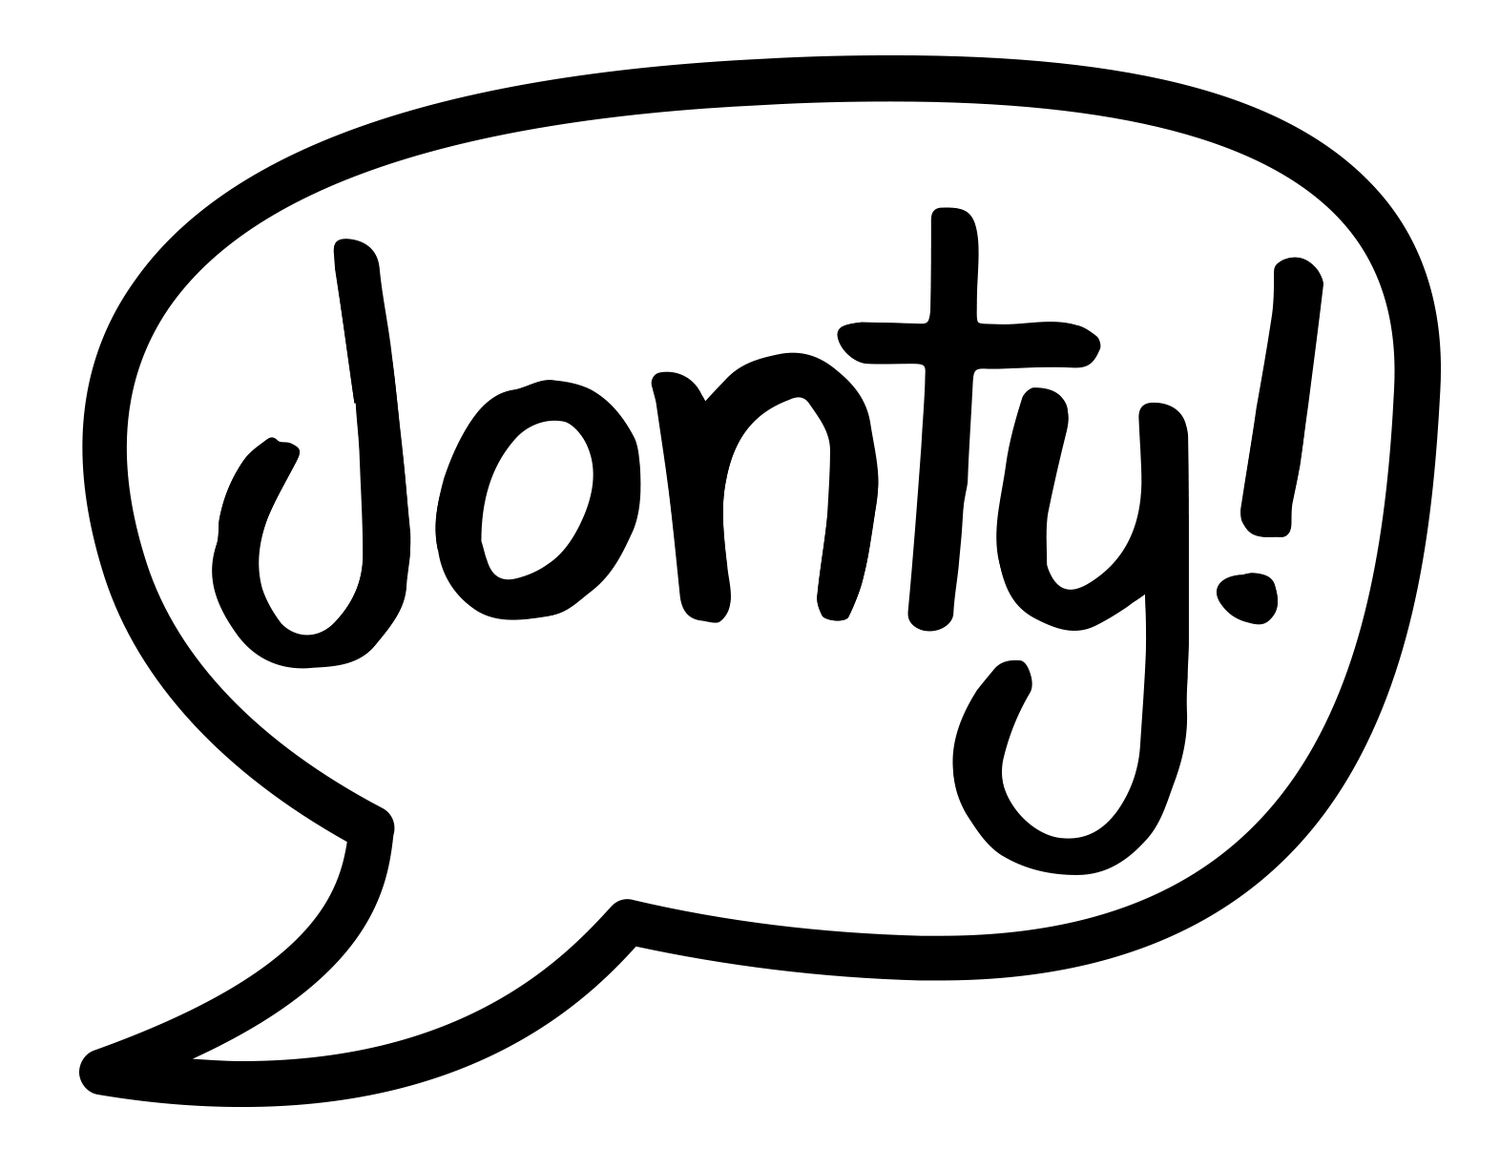 JontyD